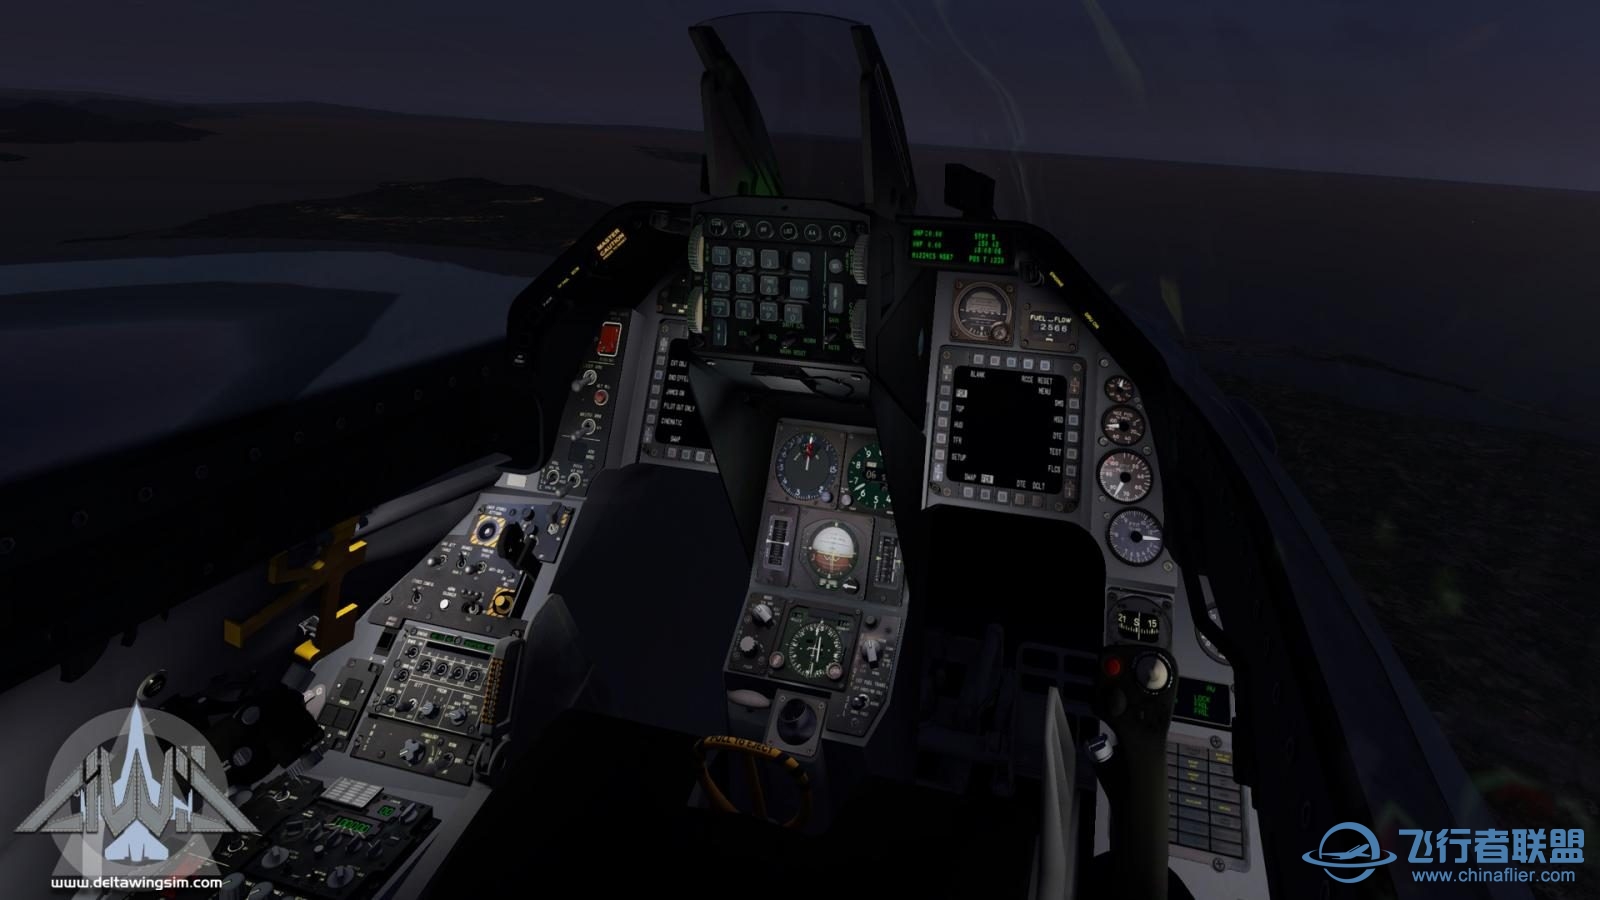 DeltaWing Simulations 发布 F-16C XPL-7567 